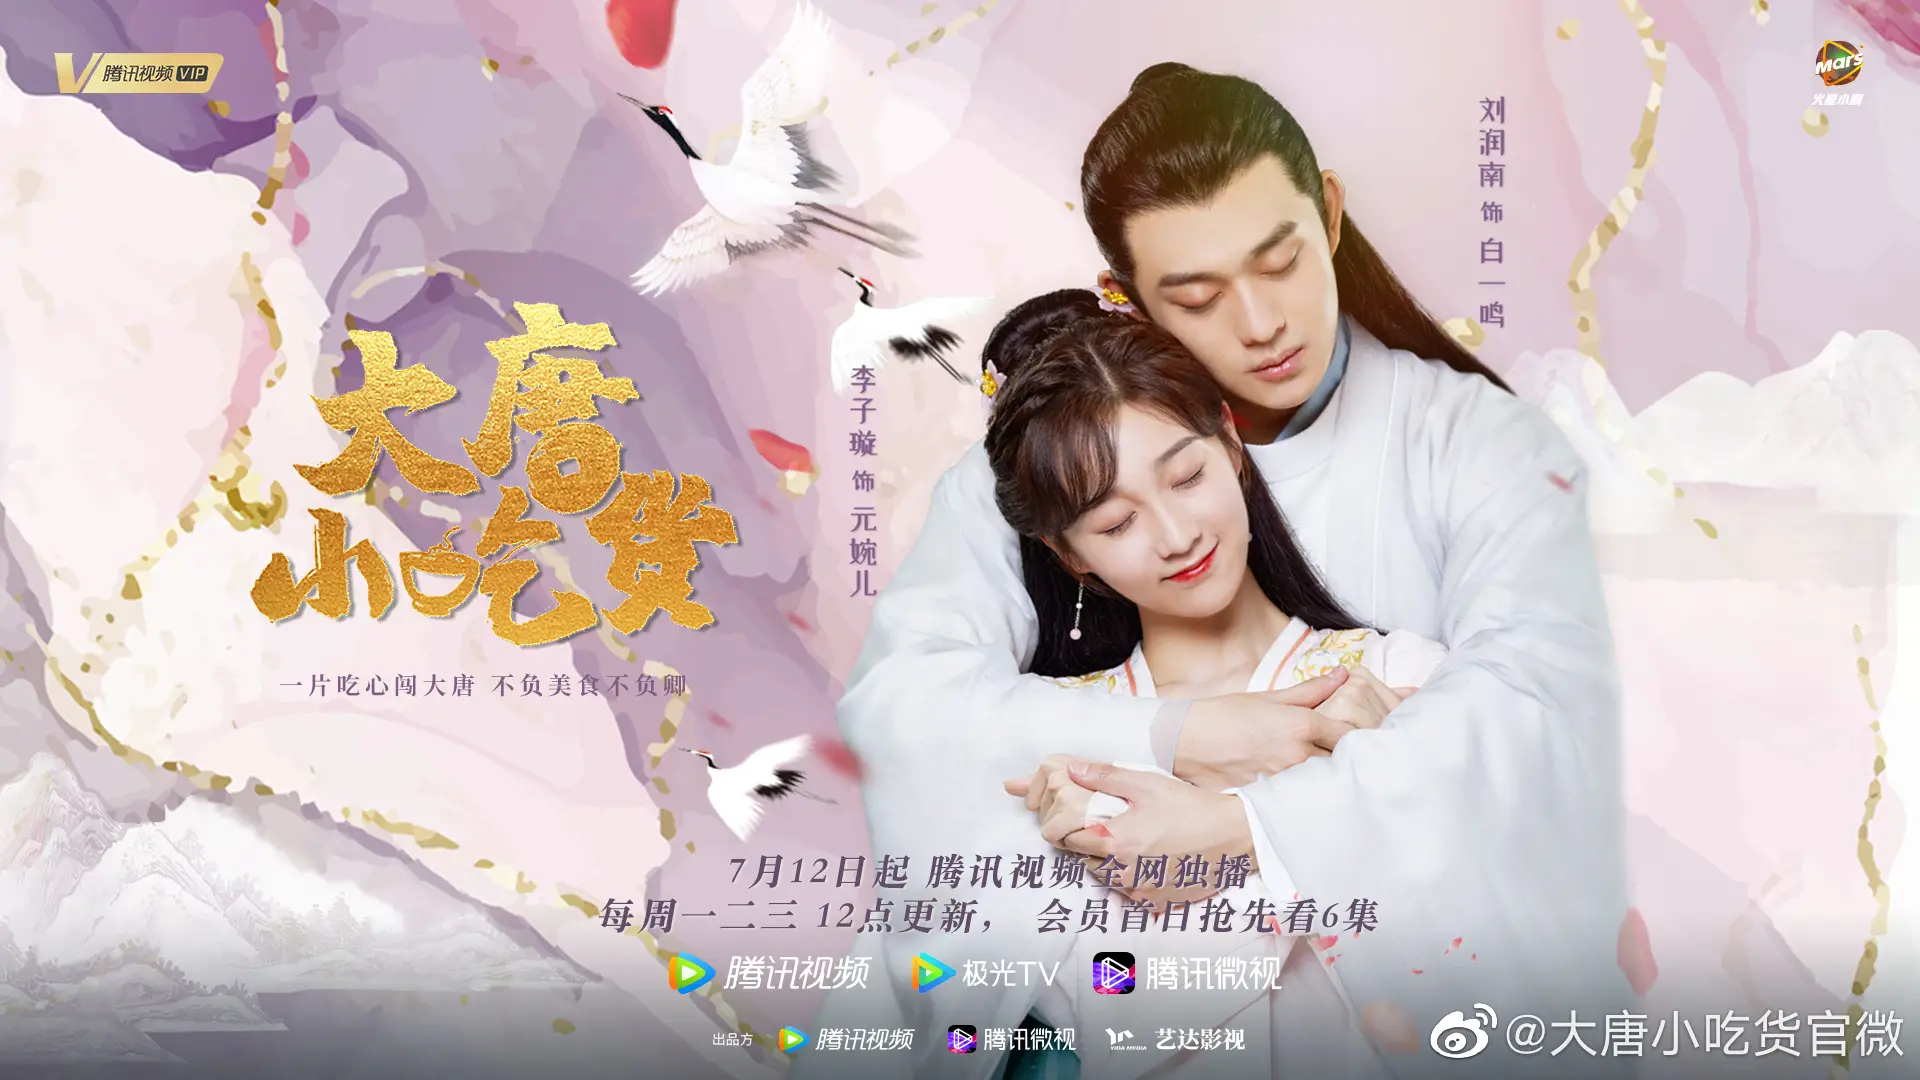 Chinese Drama, Chinese Series, ซีรี่ย์จีน, ละครจีน